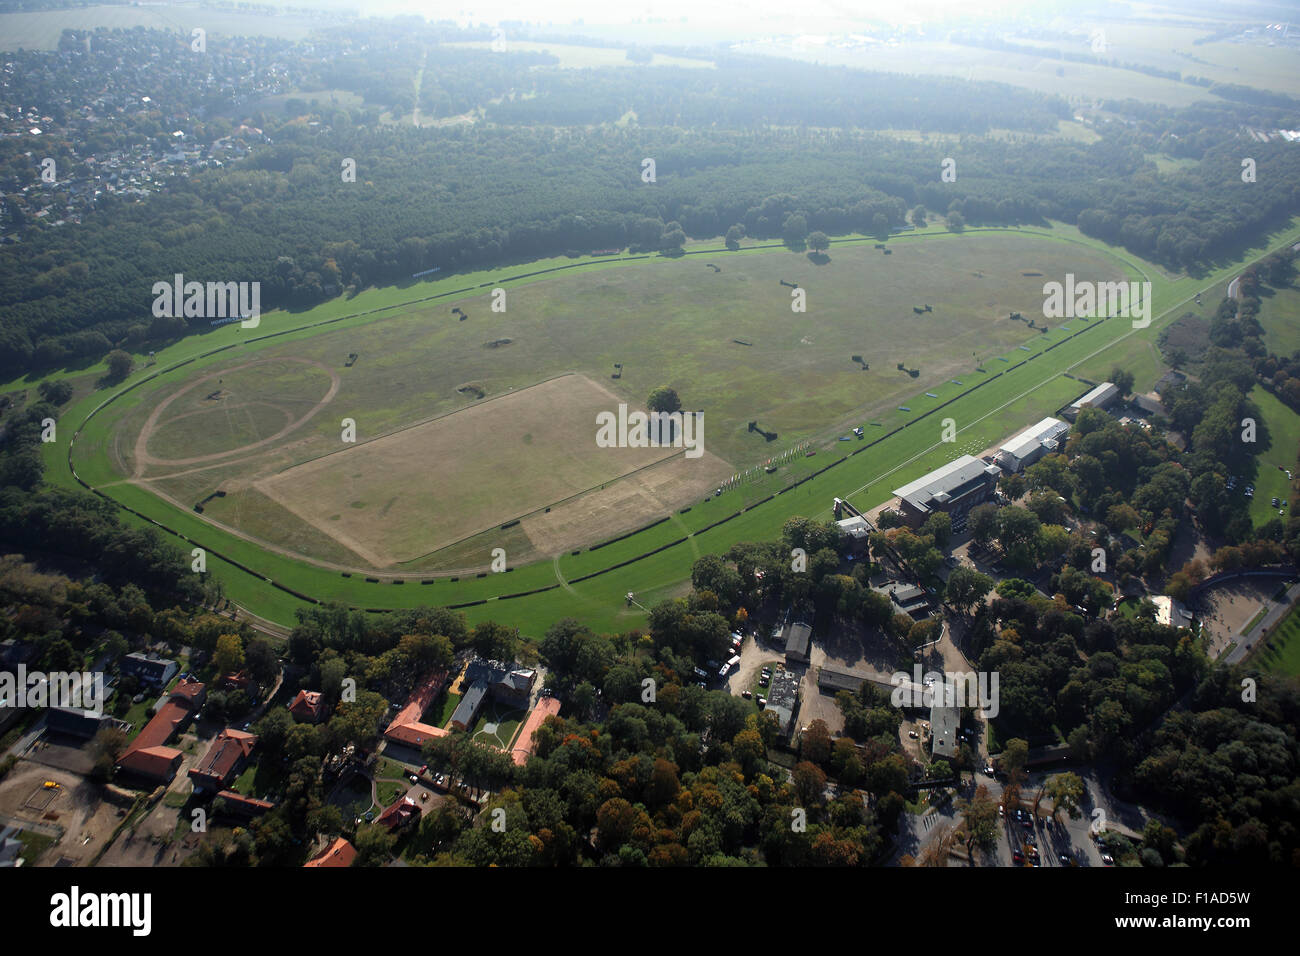 Hoppegarten, Germany, aerial view of the racecourse Hoppegarten Stock Photo